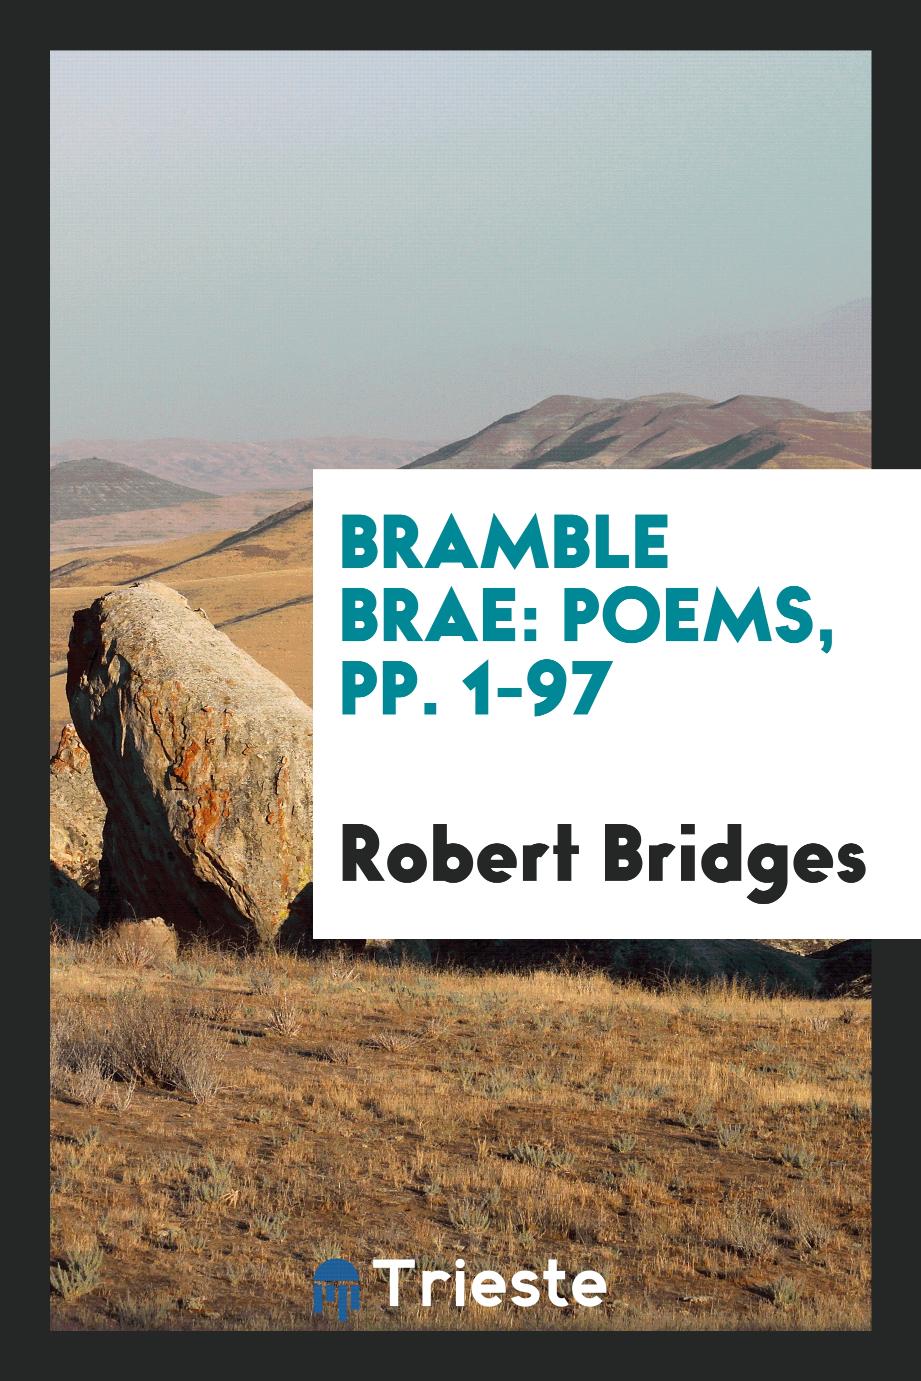 Bramble Brae: Poems, pp. 1-97